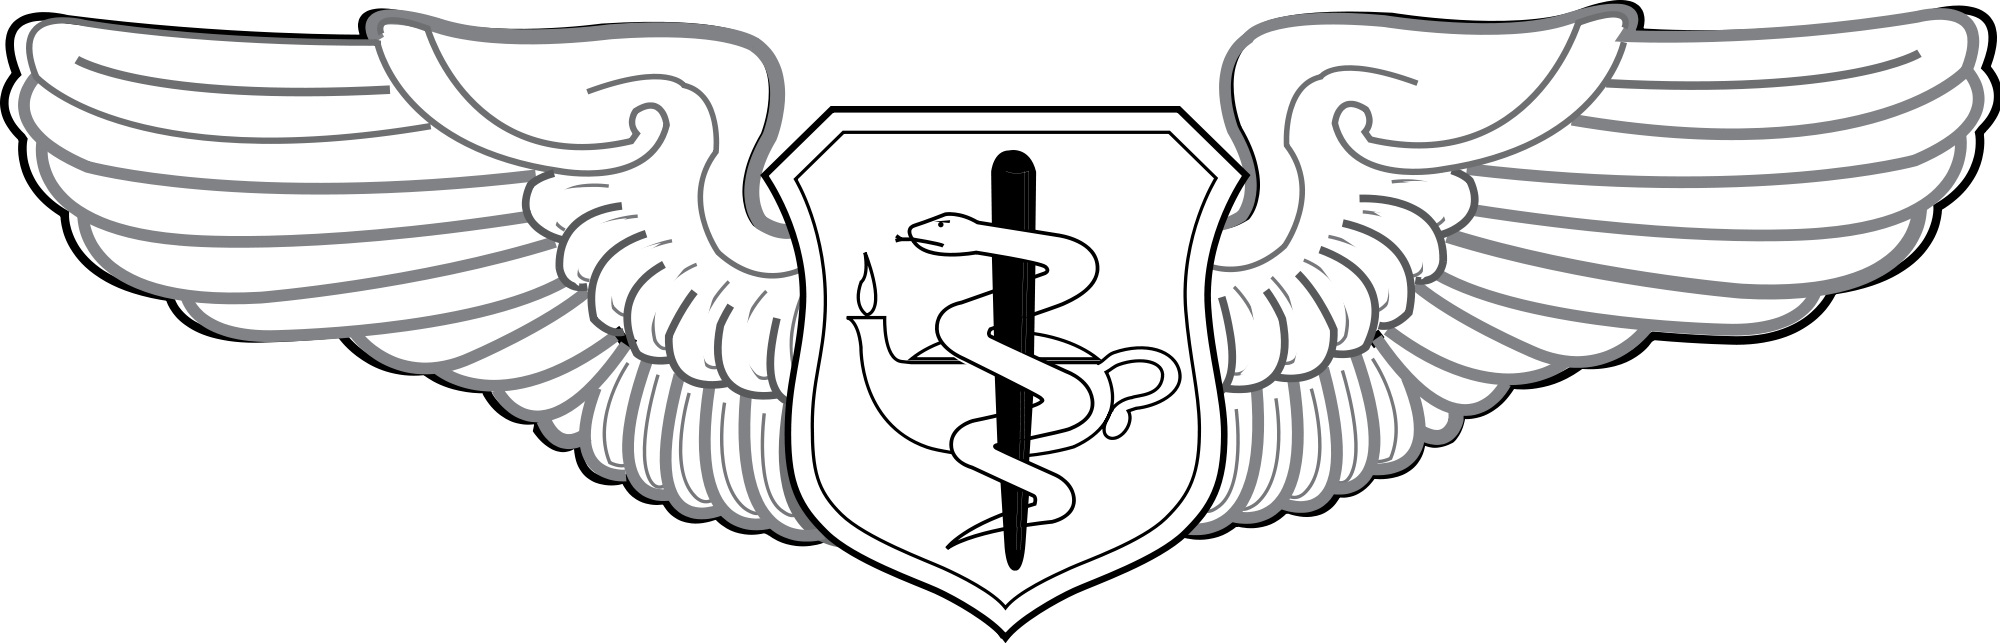 Logo clipart nurse. File united states air